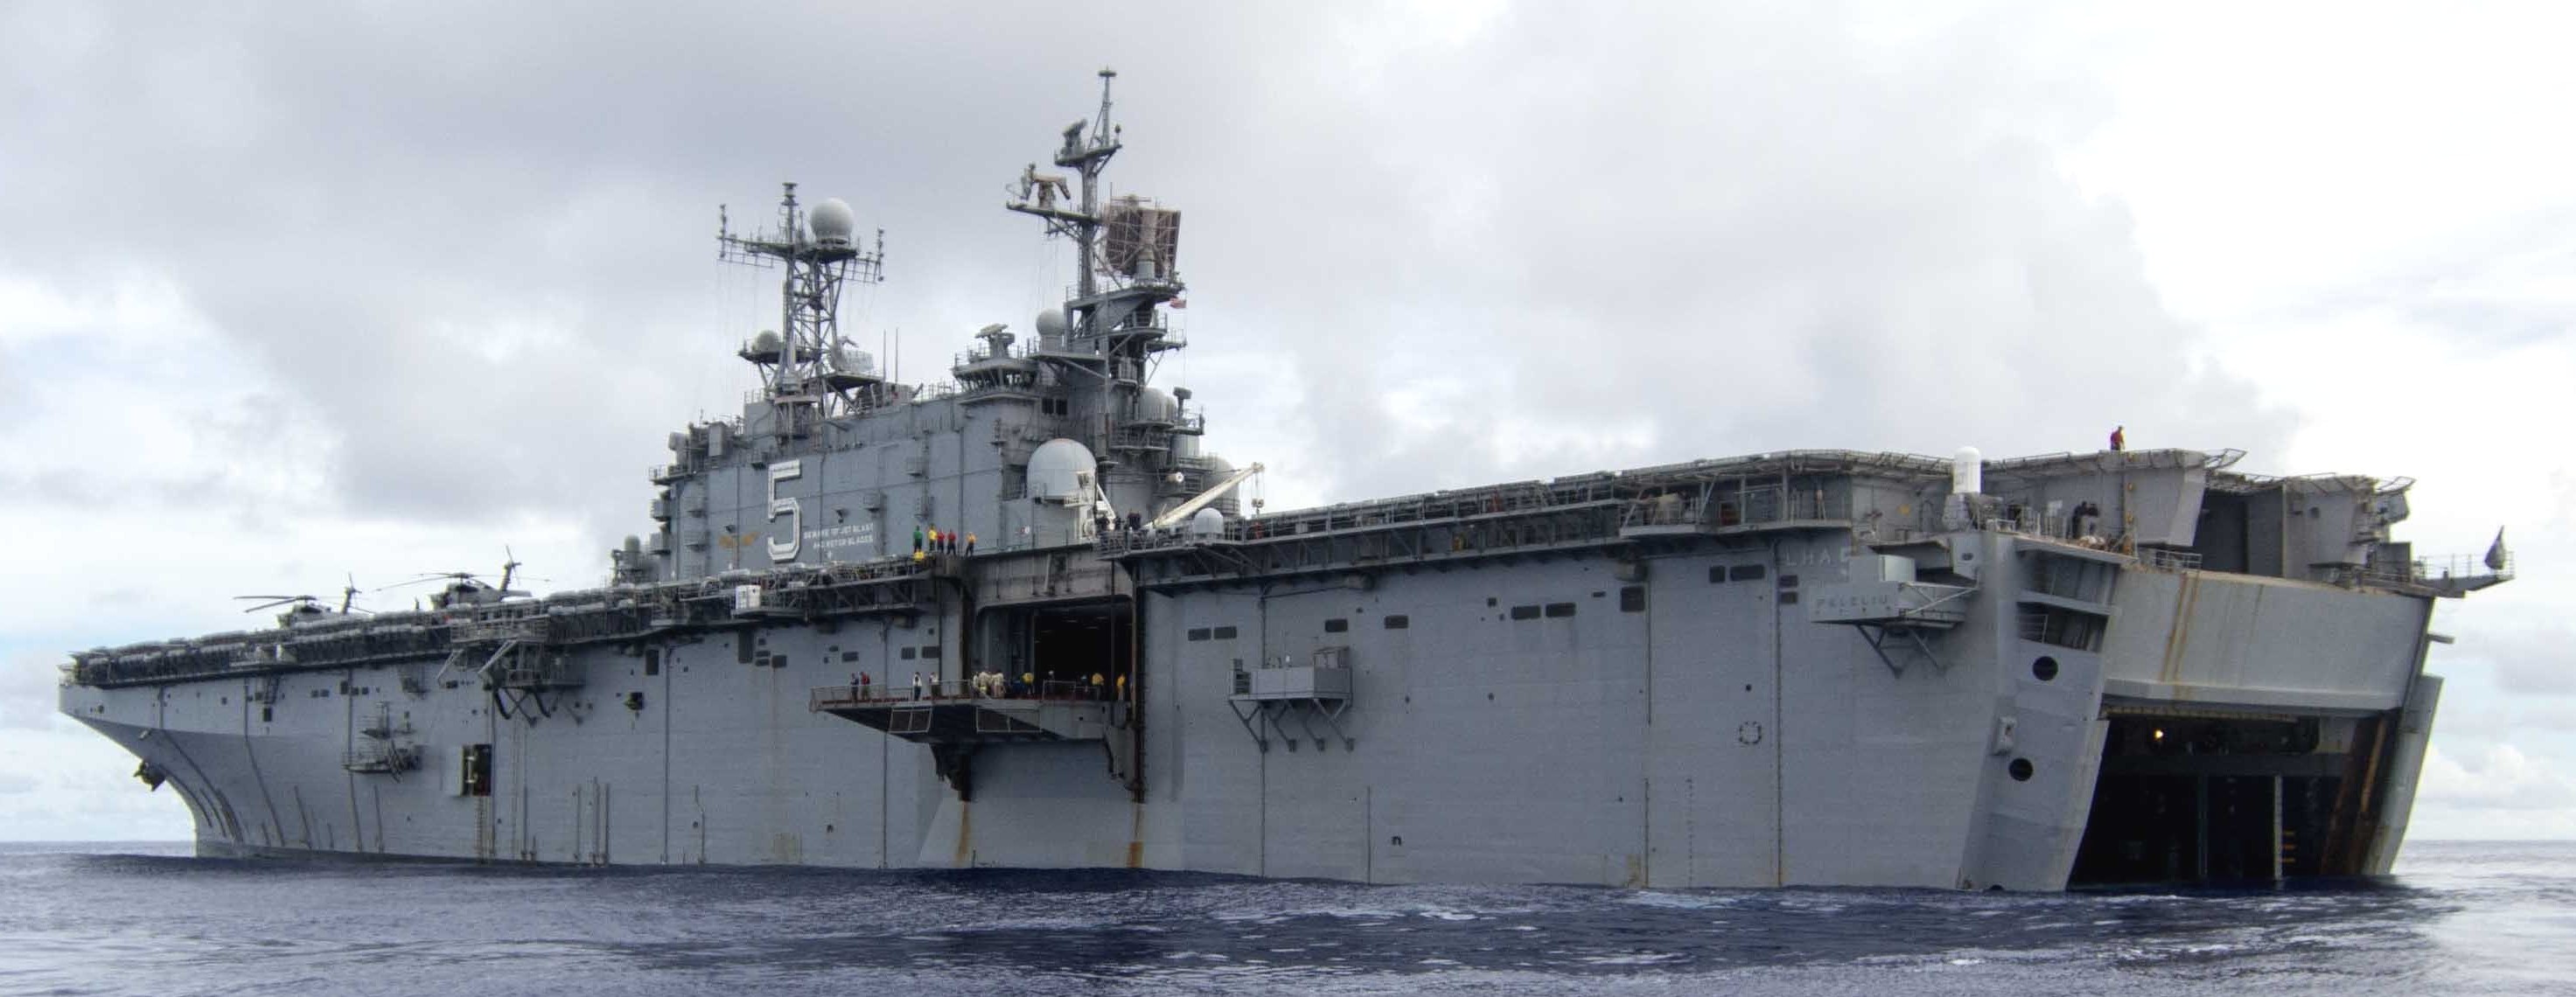 lha-5 uss peleliu tarawa class amphibious assault ship landing helicopter us navy rimpac 14 114